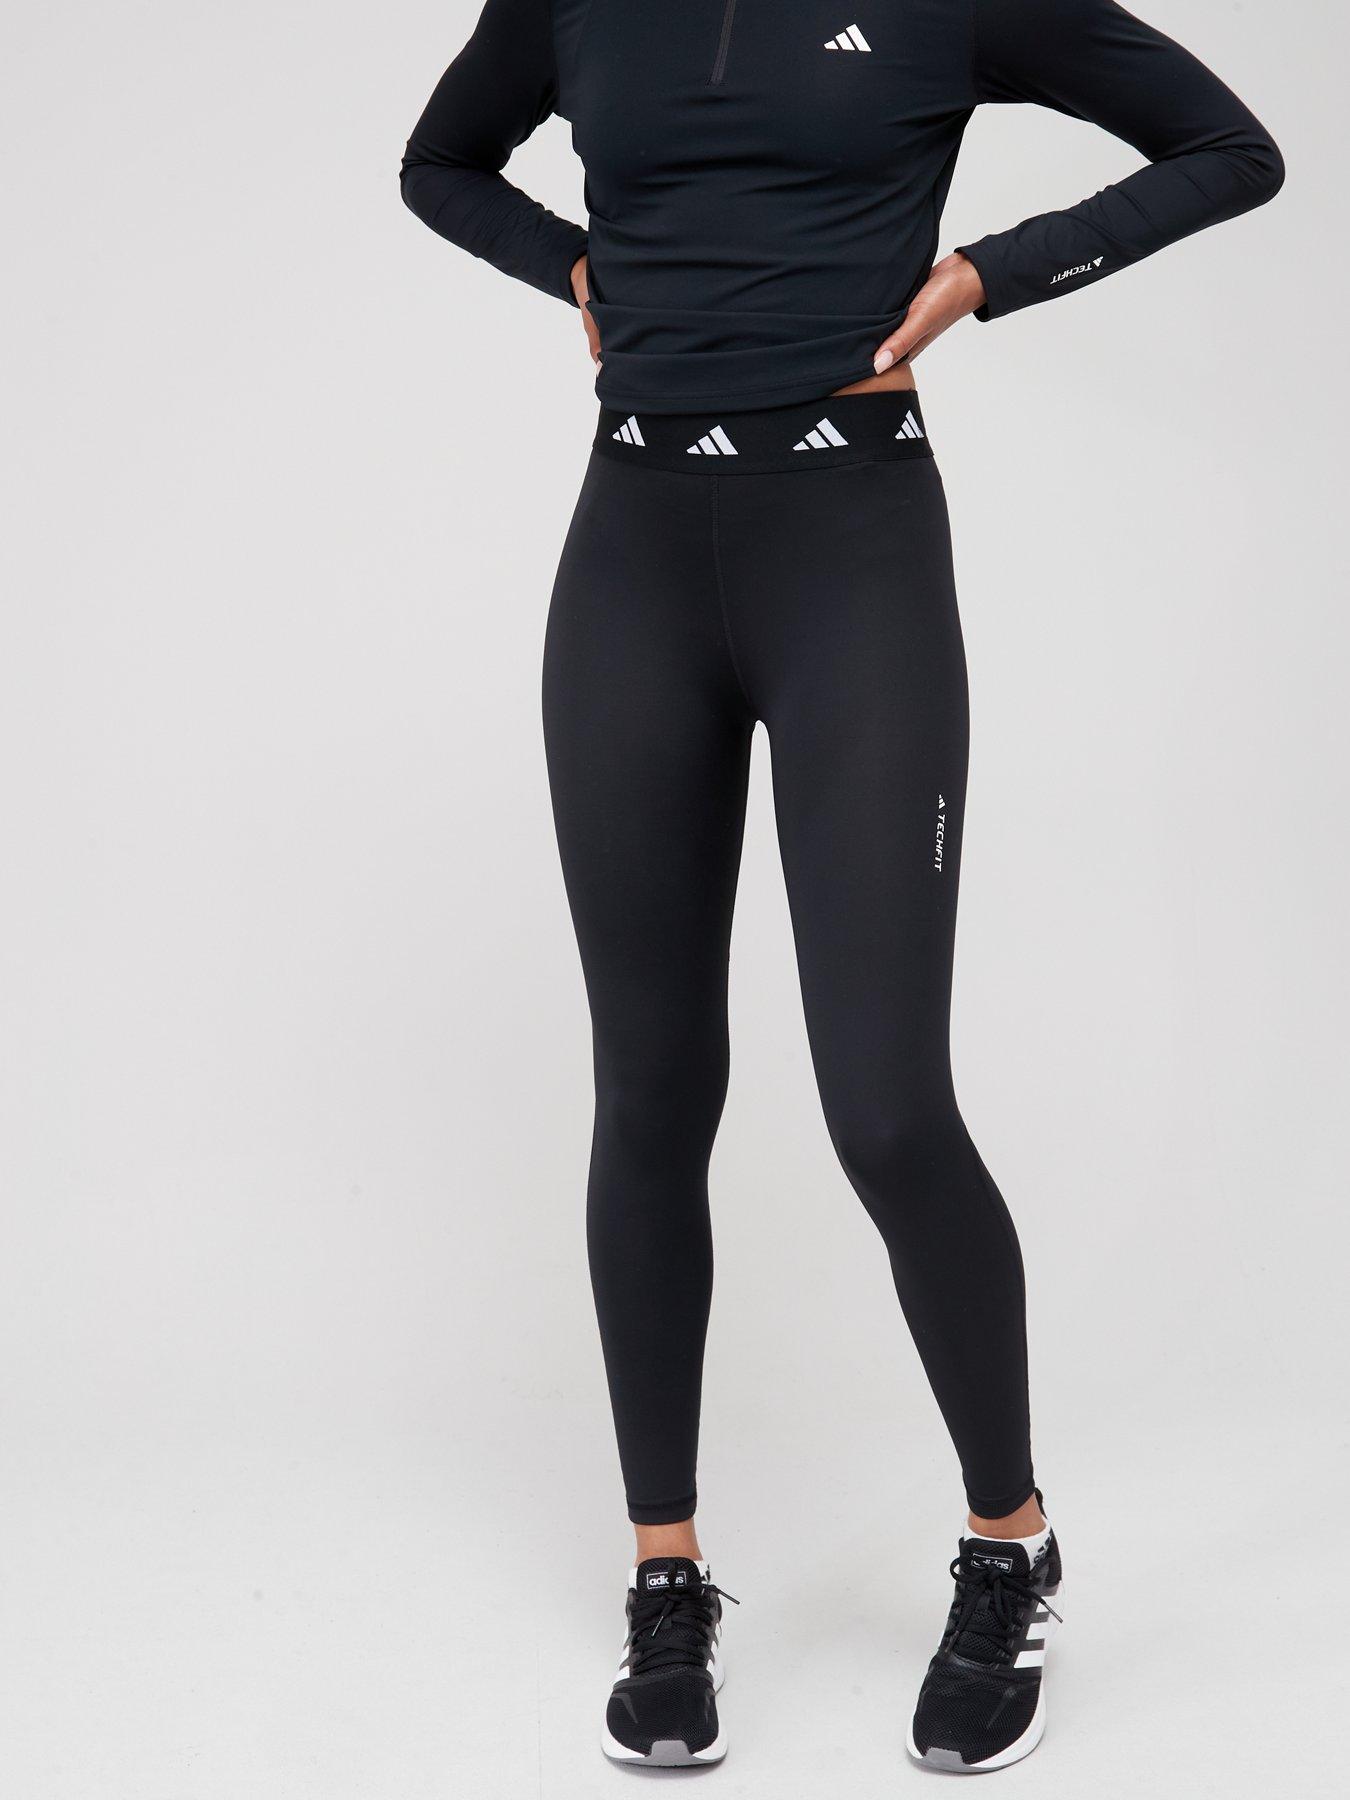 UNDER ARMOUR Womens Training Heat Gear Authentics Legging - Black